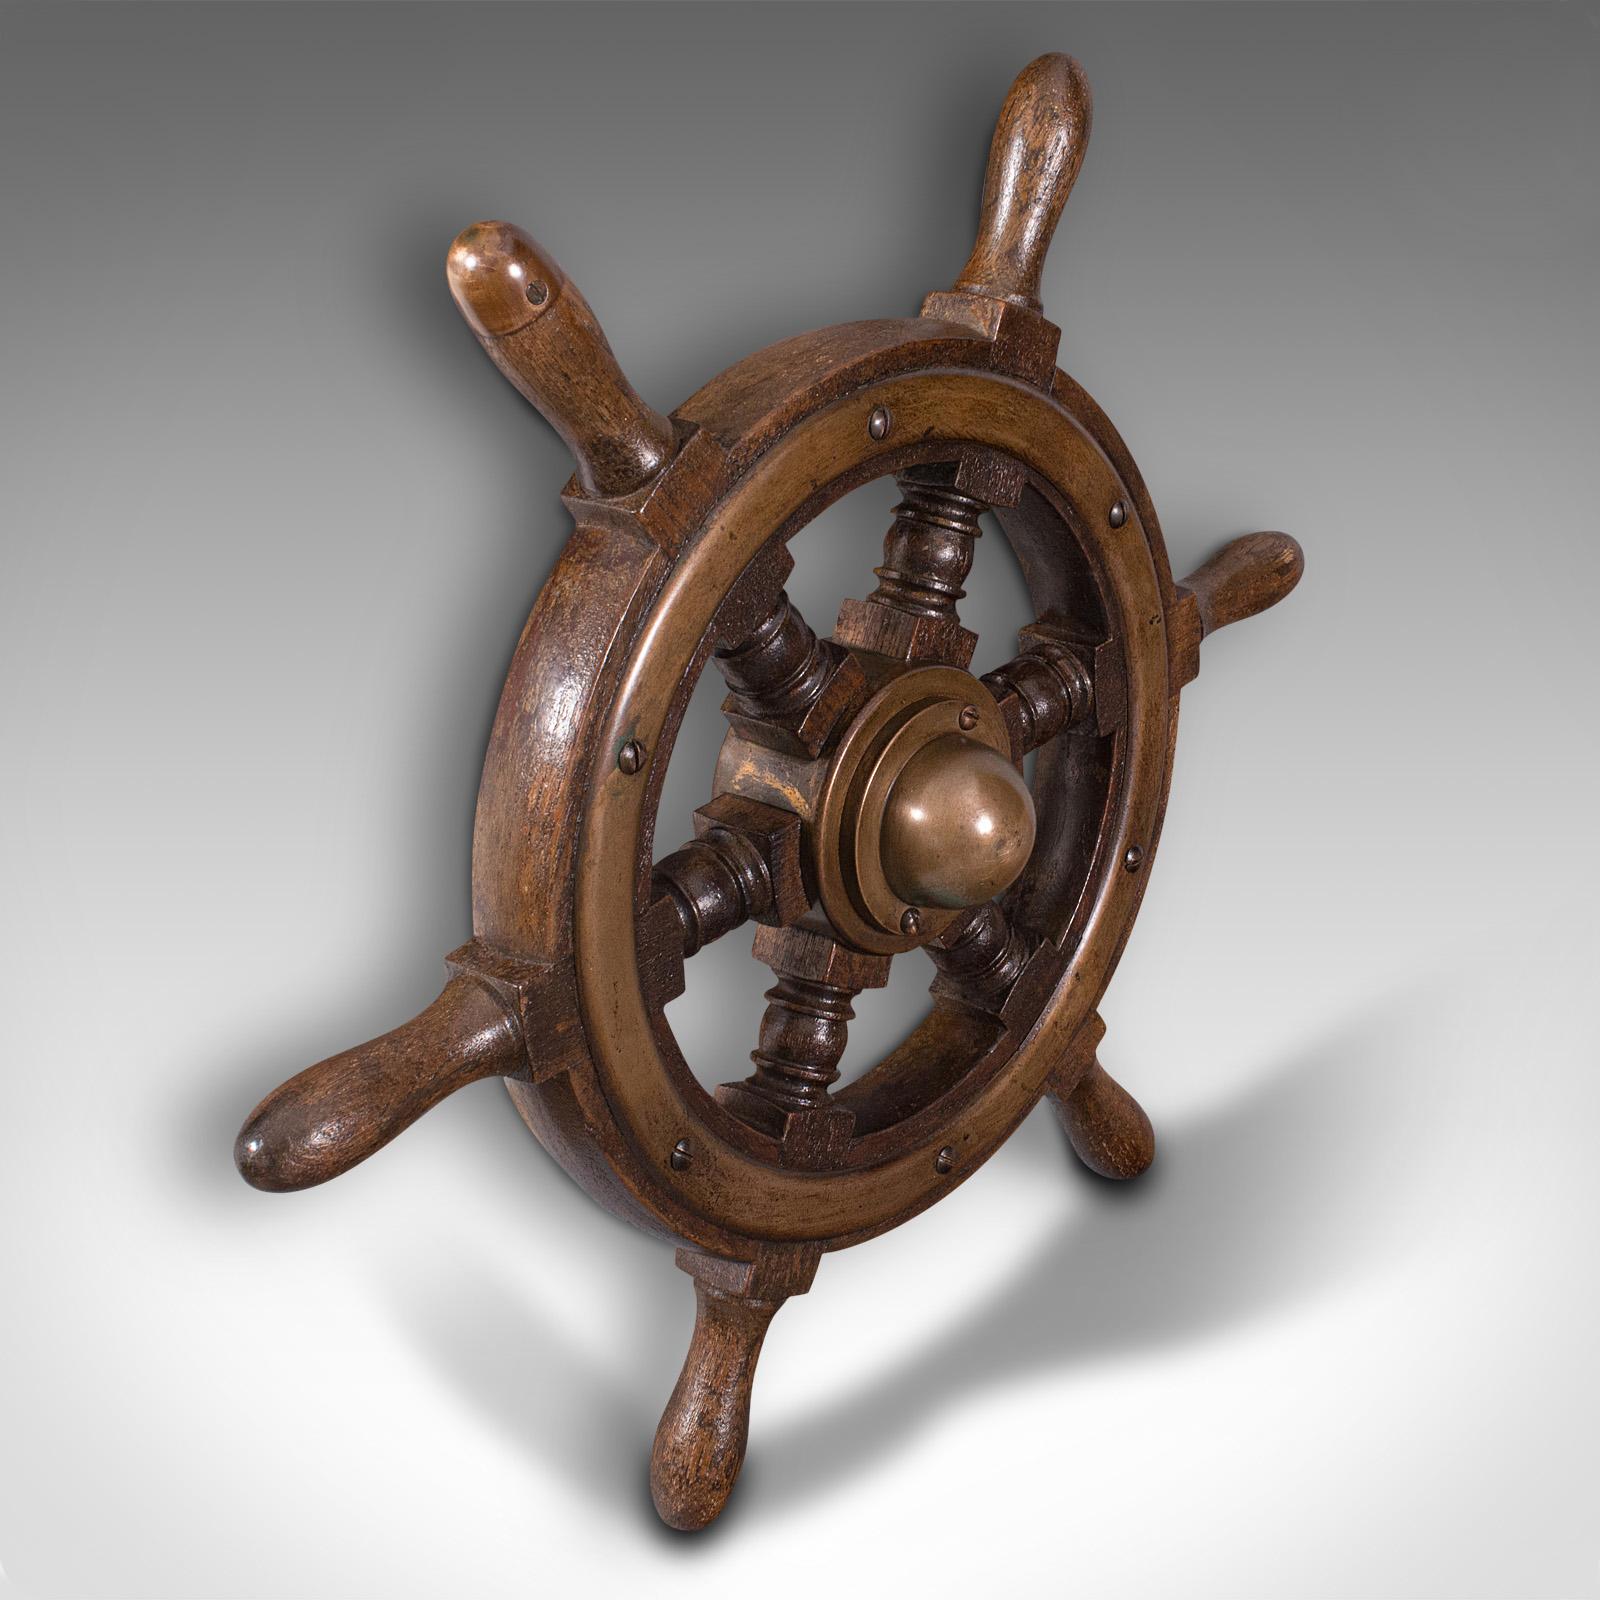 20th Century Small Antique Ship's Wheel, English, Teak, Bronze, Maritime, Decorative, C.1920